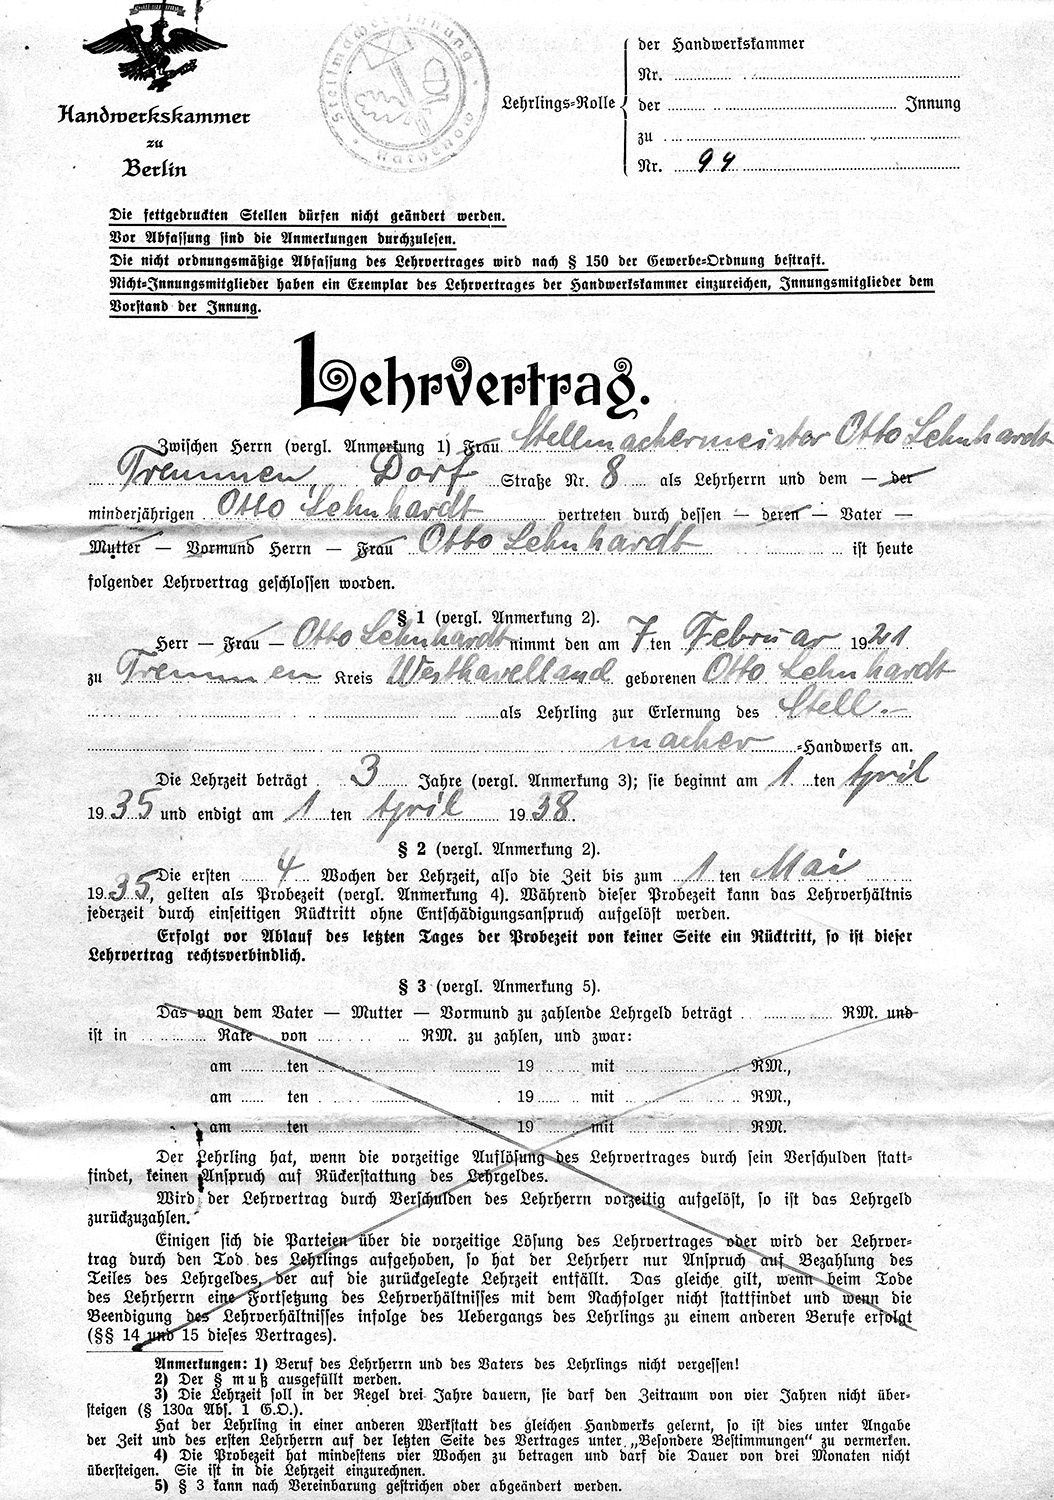 Lehrvertrag Stellmacherlehre. vom 1. April 1935 (Dorfmuseum Tremmen CC BY-NC-SA)